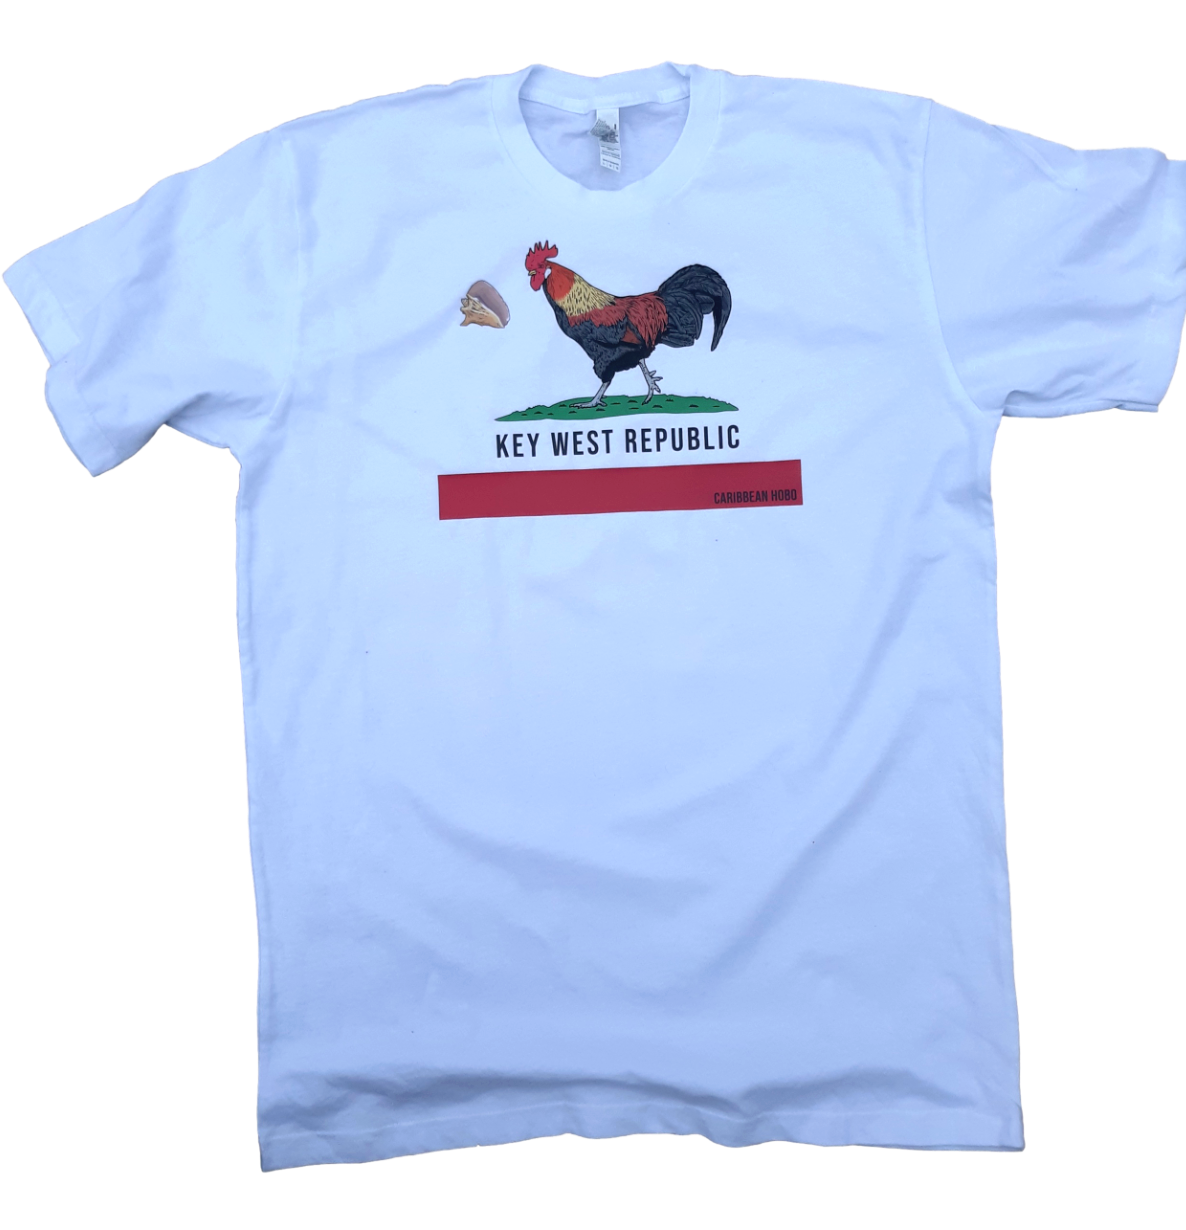 Key West Republic T-shirt